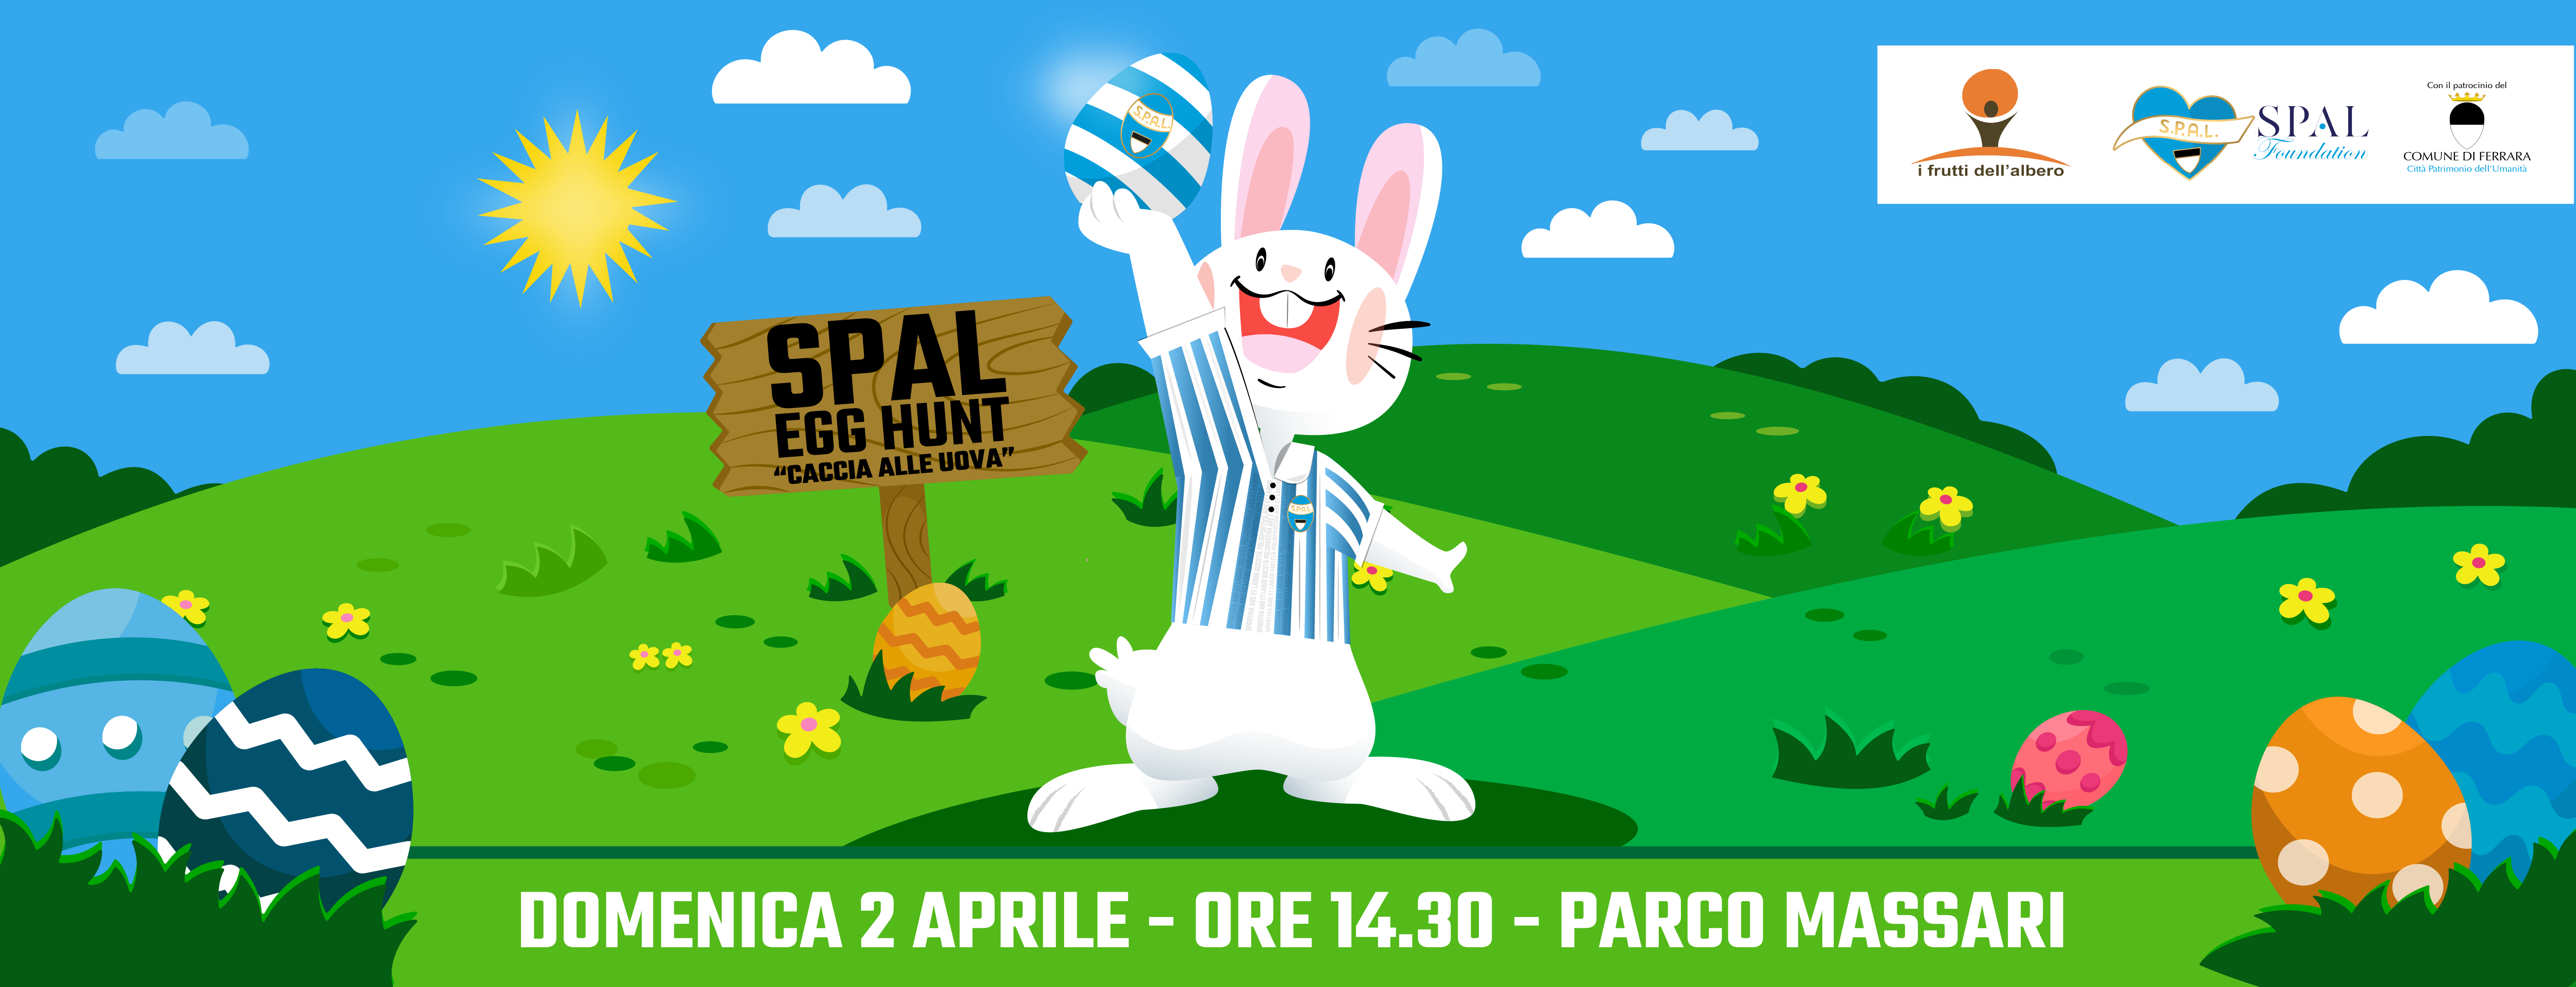 Featured image for “Domenica 2 aprile: “SPAL Easter Egg Hunt””